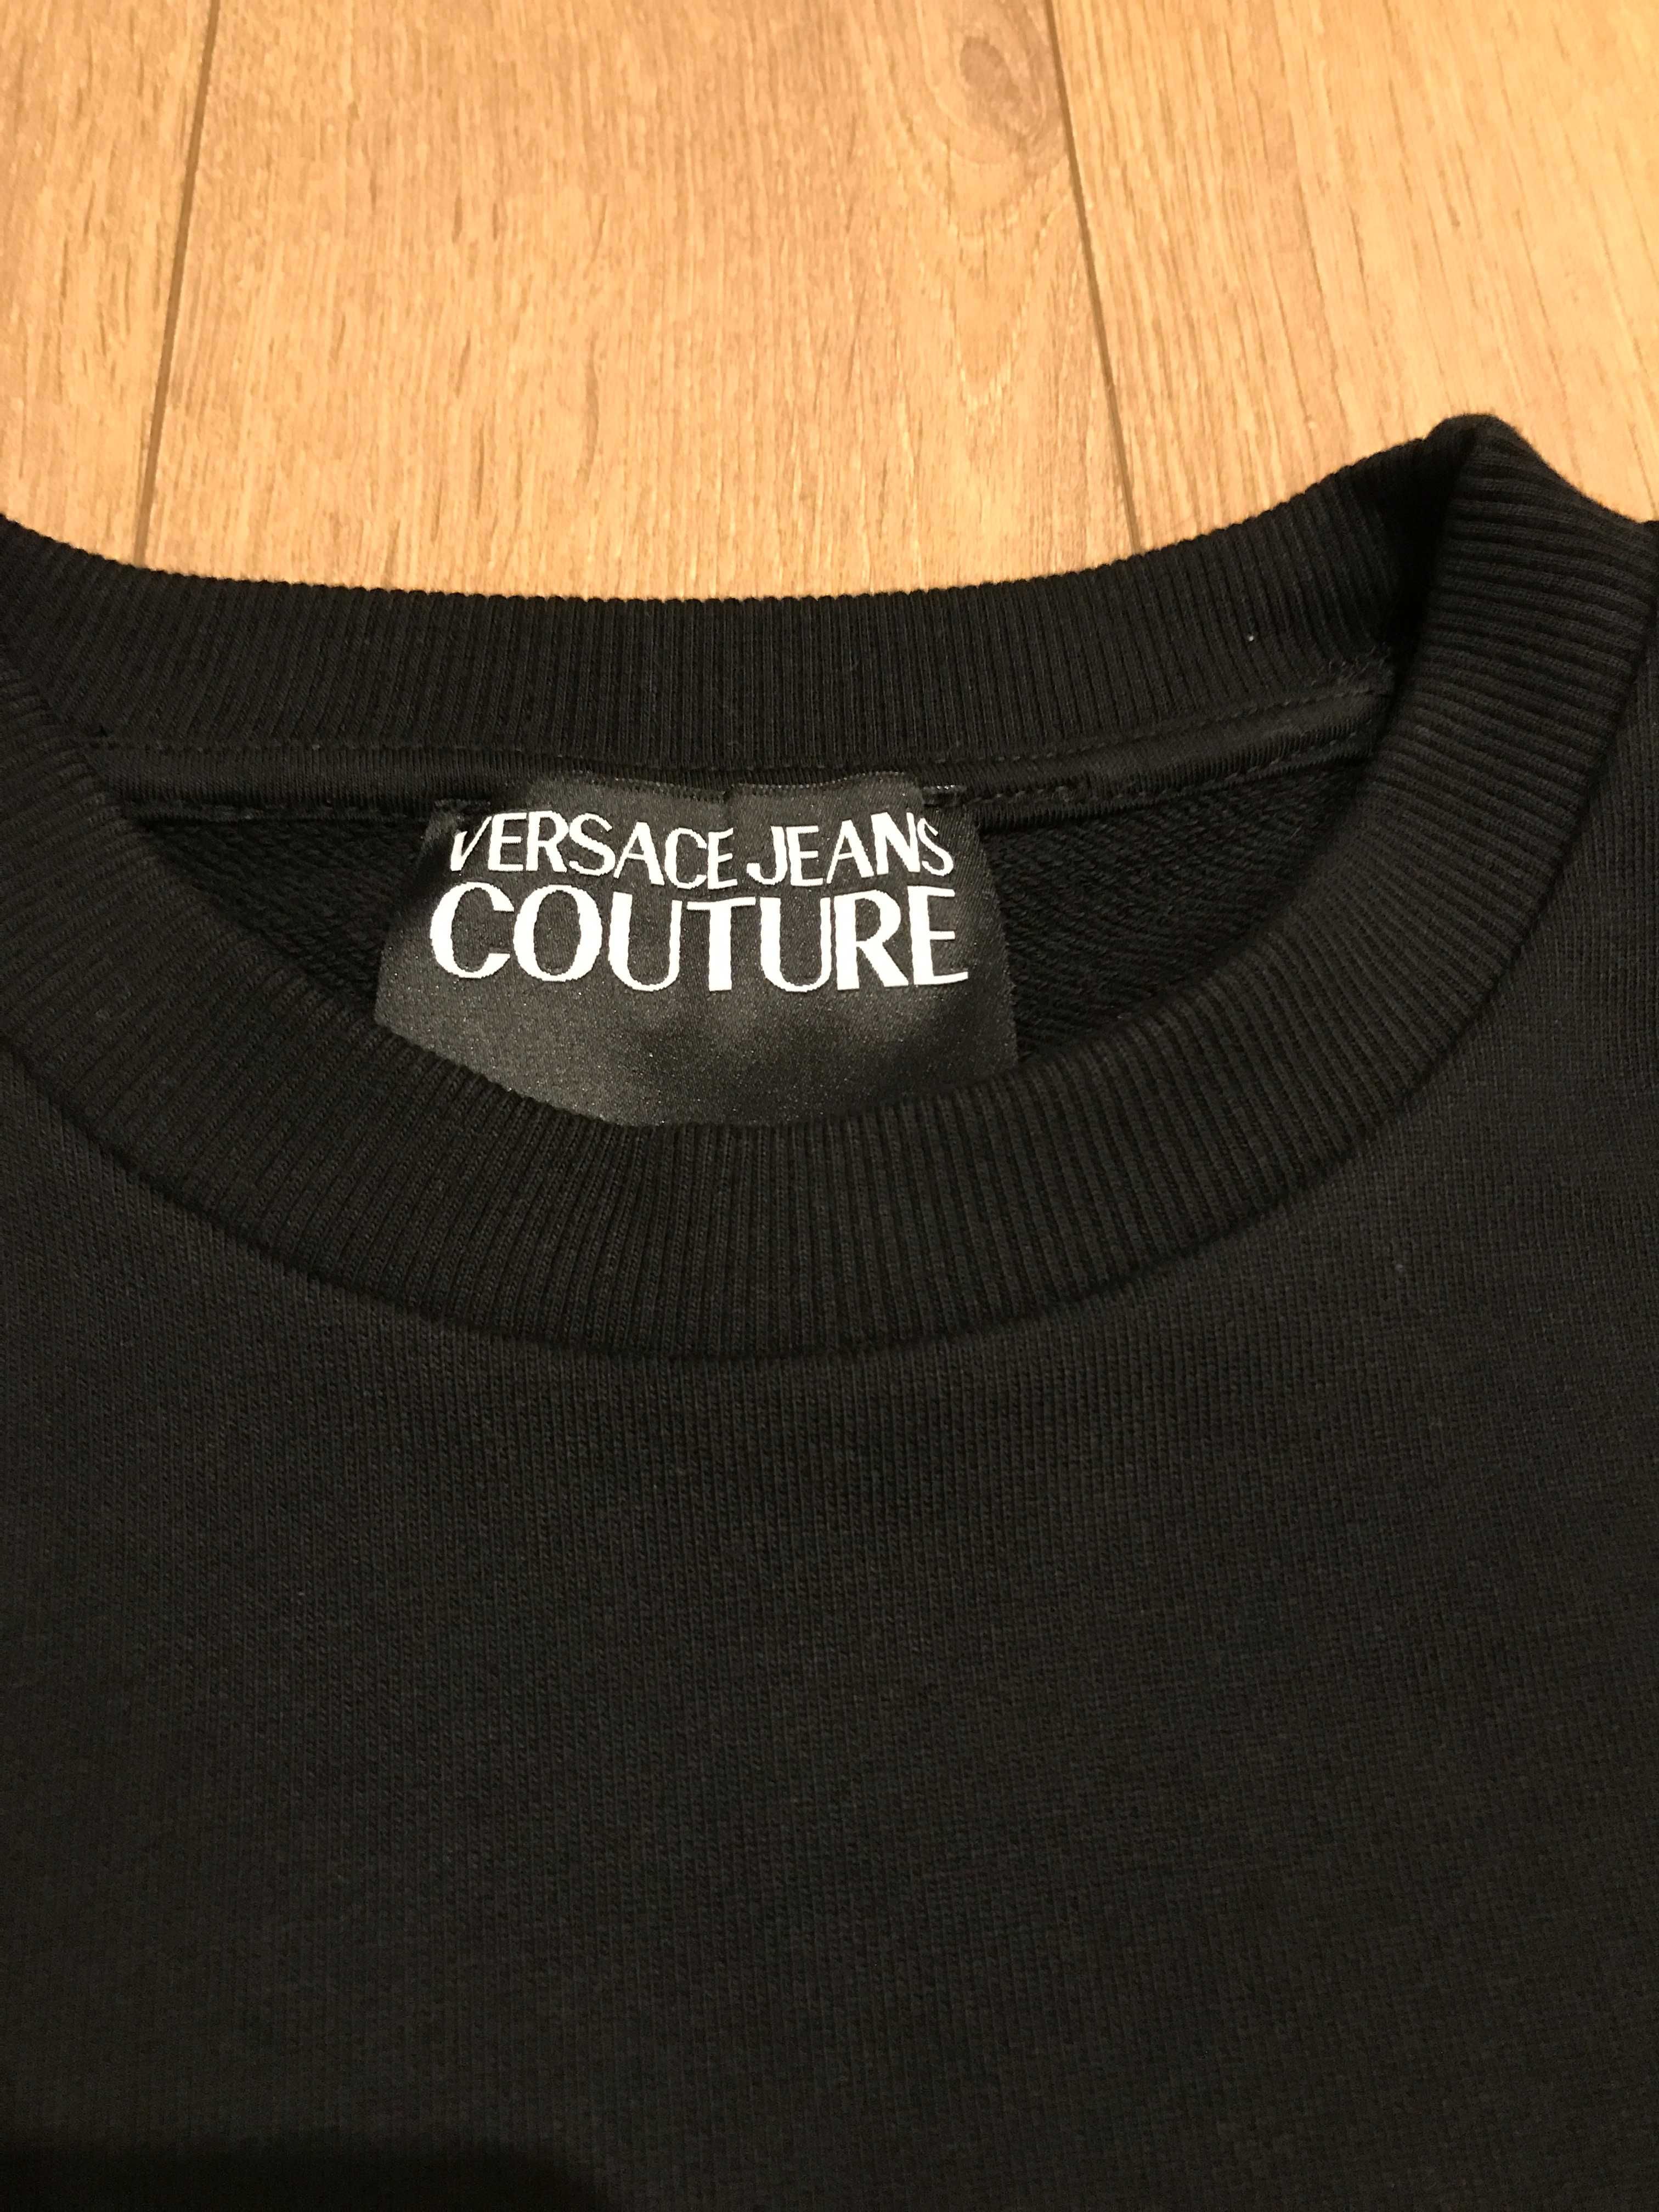 VERSACE JEANS COUTURE, оригинална блуза, черна, Размер: XL